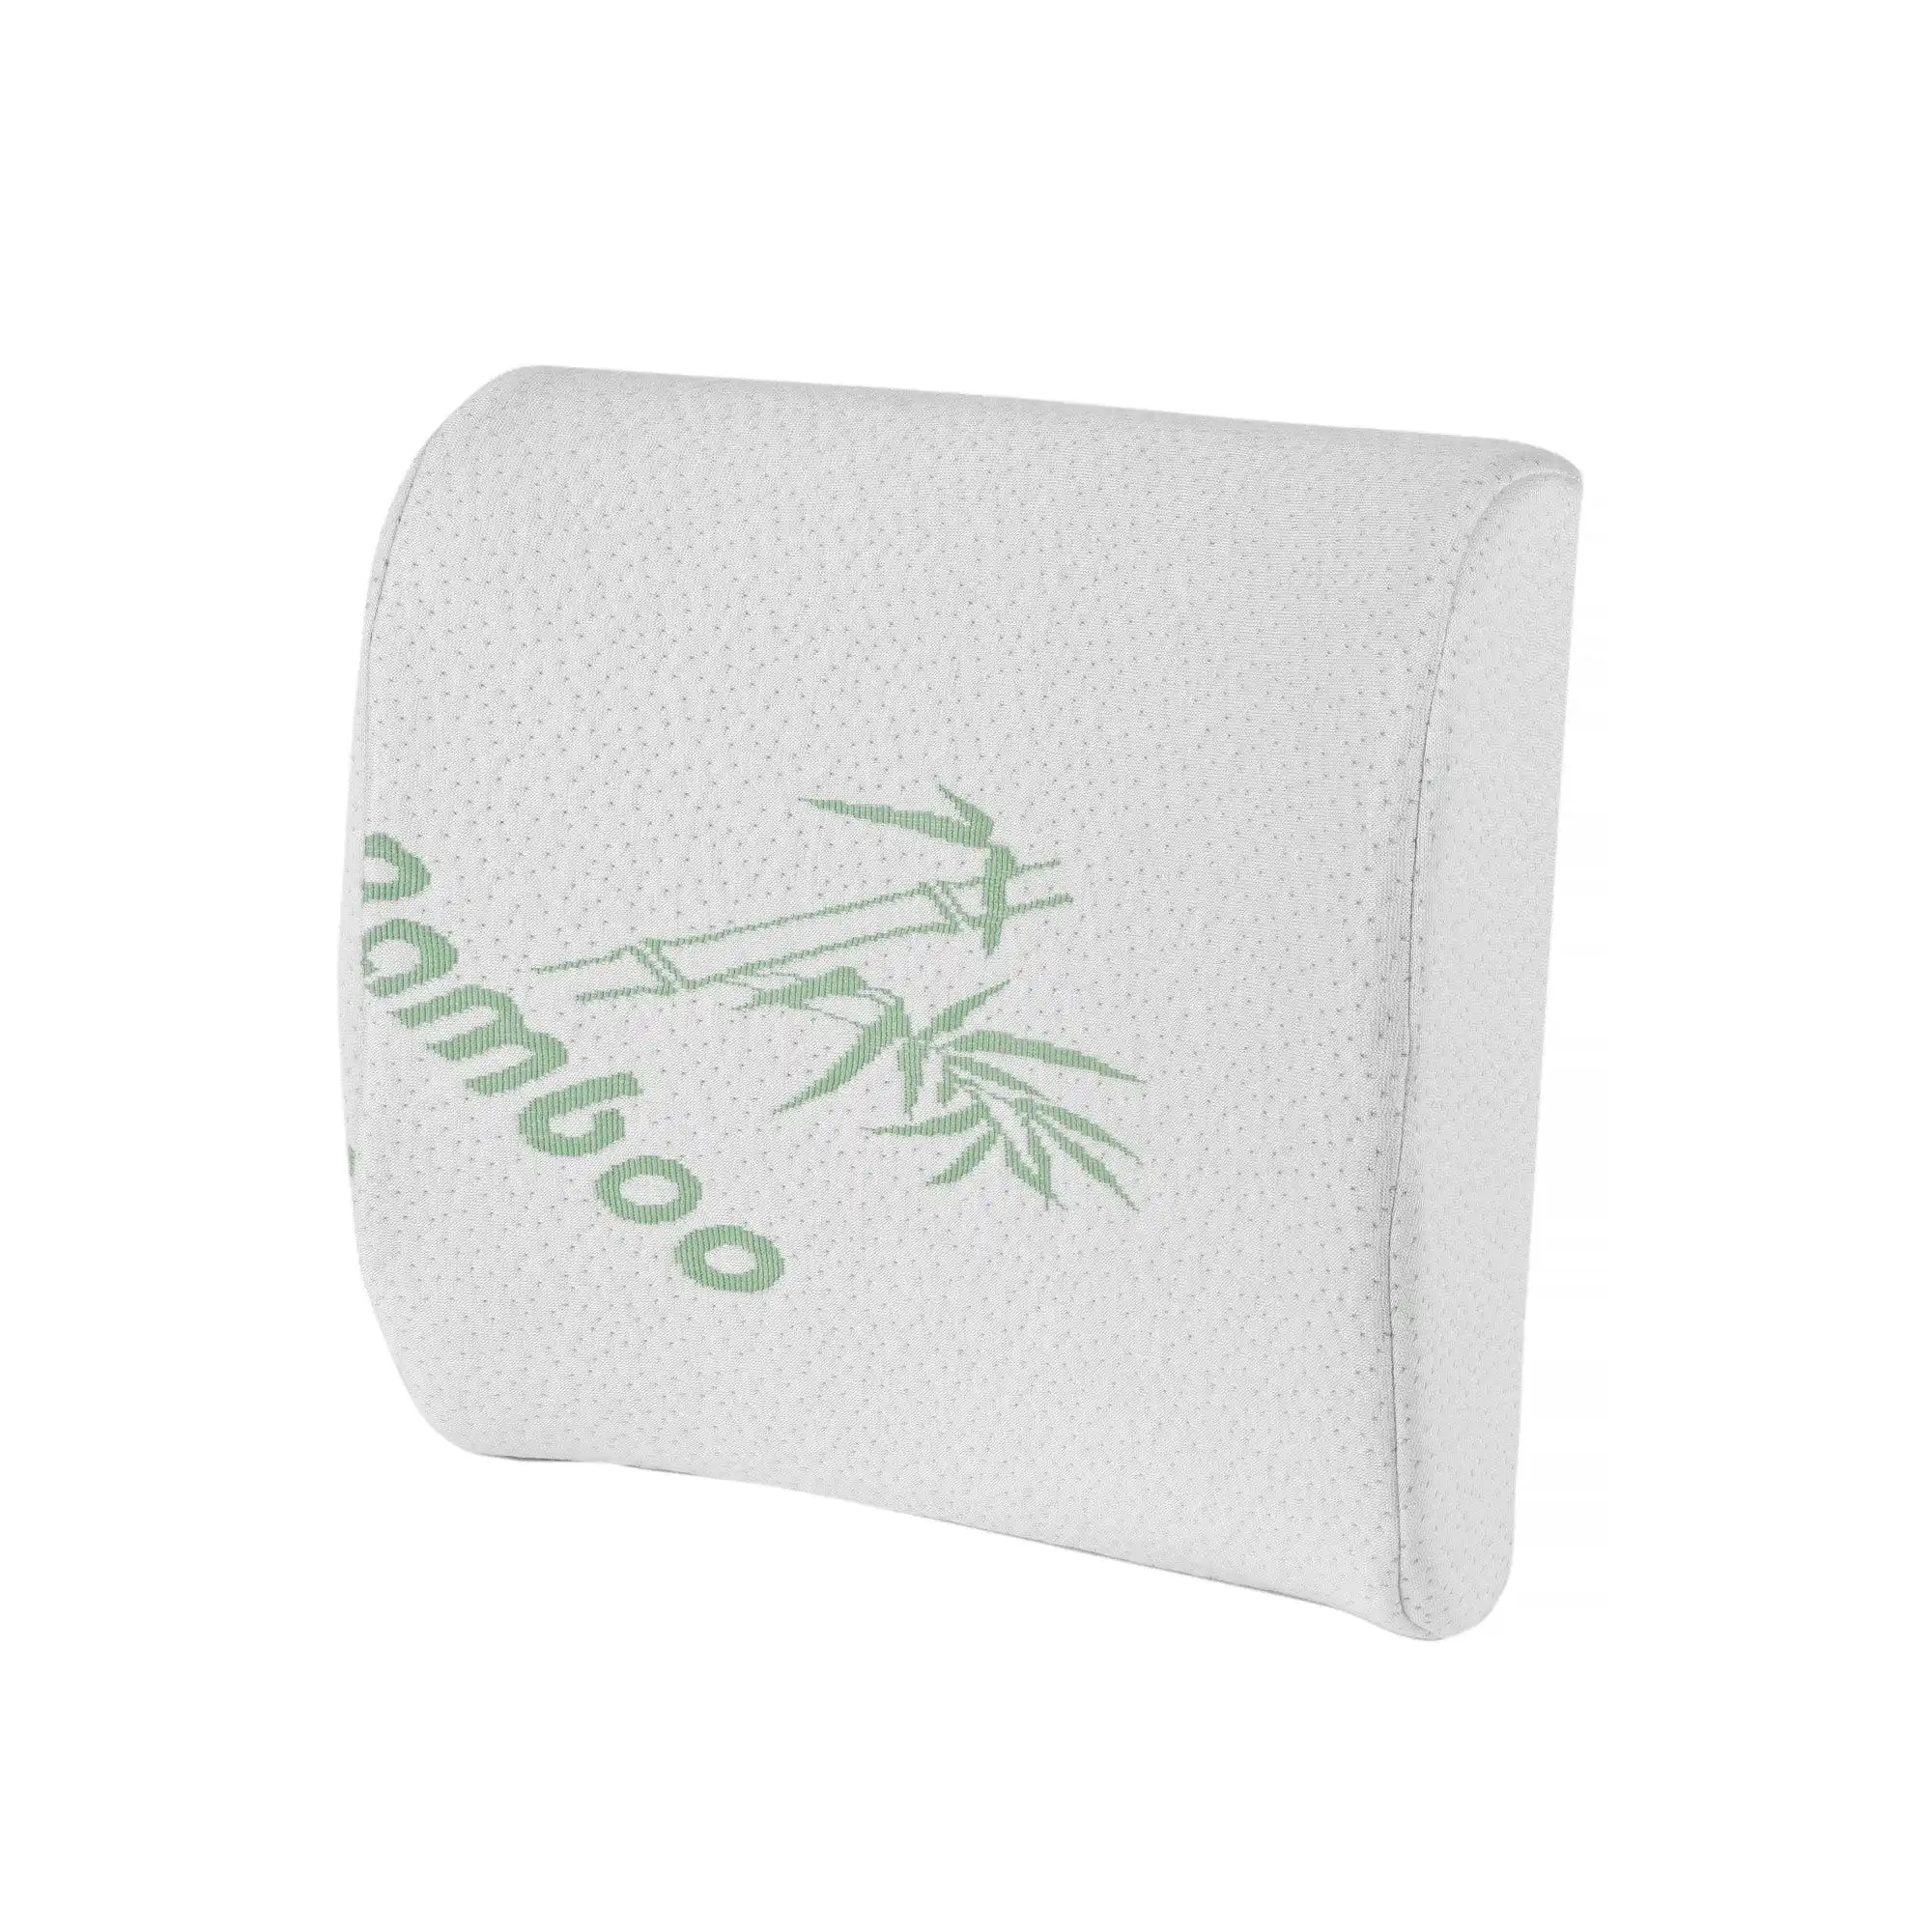 2 x Bamboo Memory Foam Lumbar Support Cushion